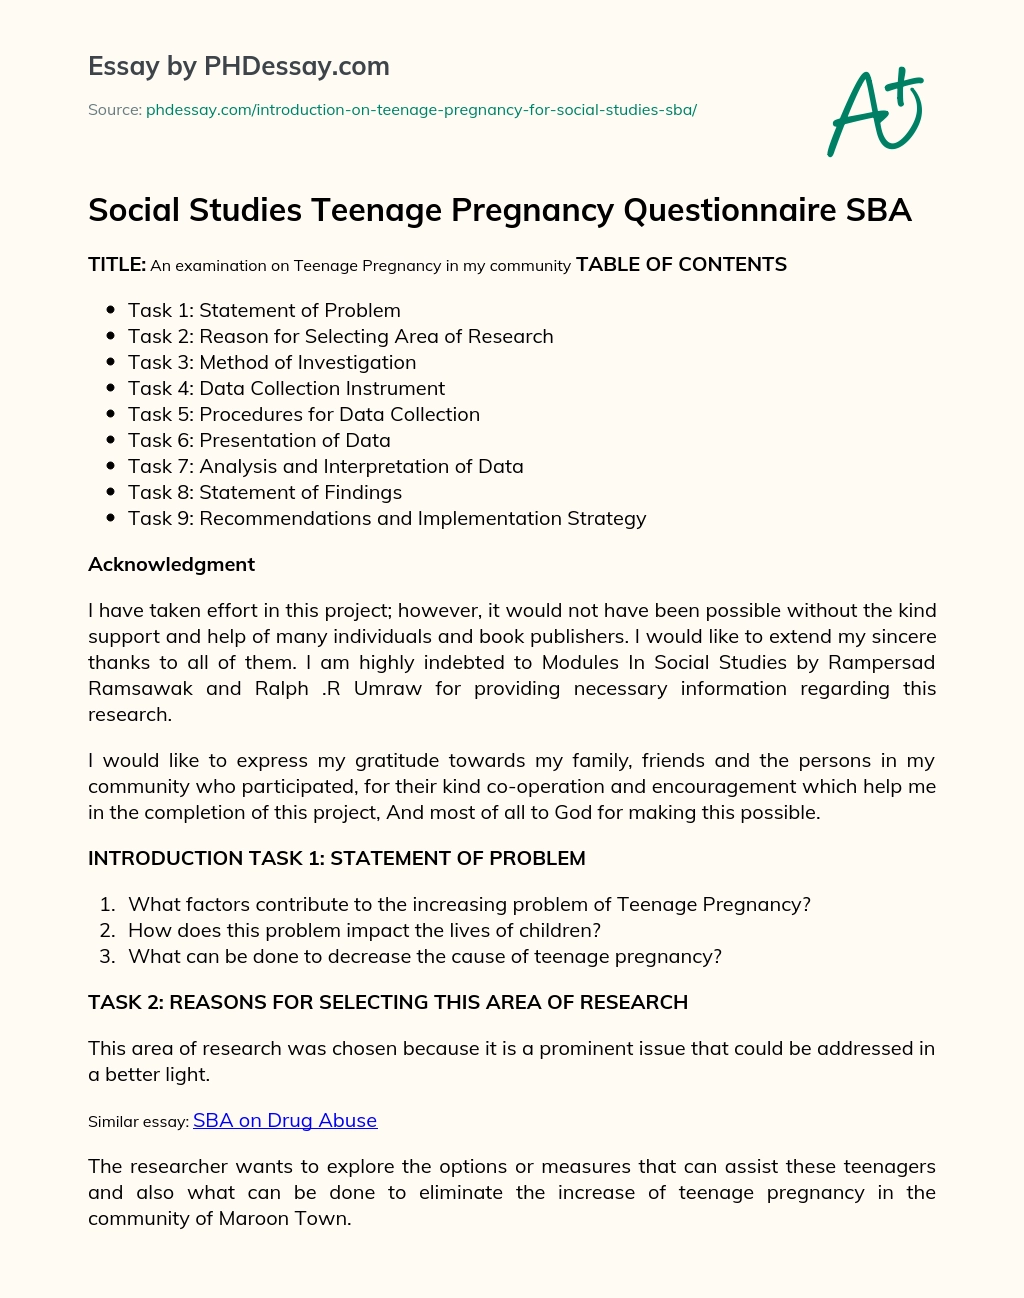 Social Studies Teenage Pregnancy Questionnaire SBA essay